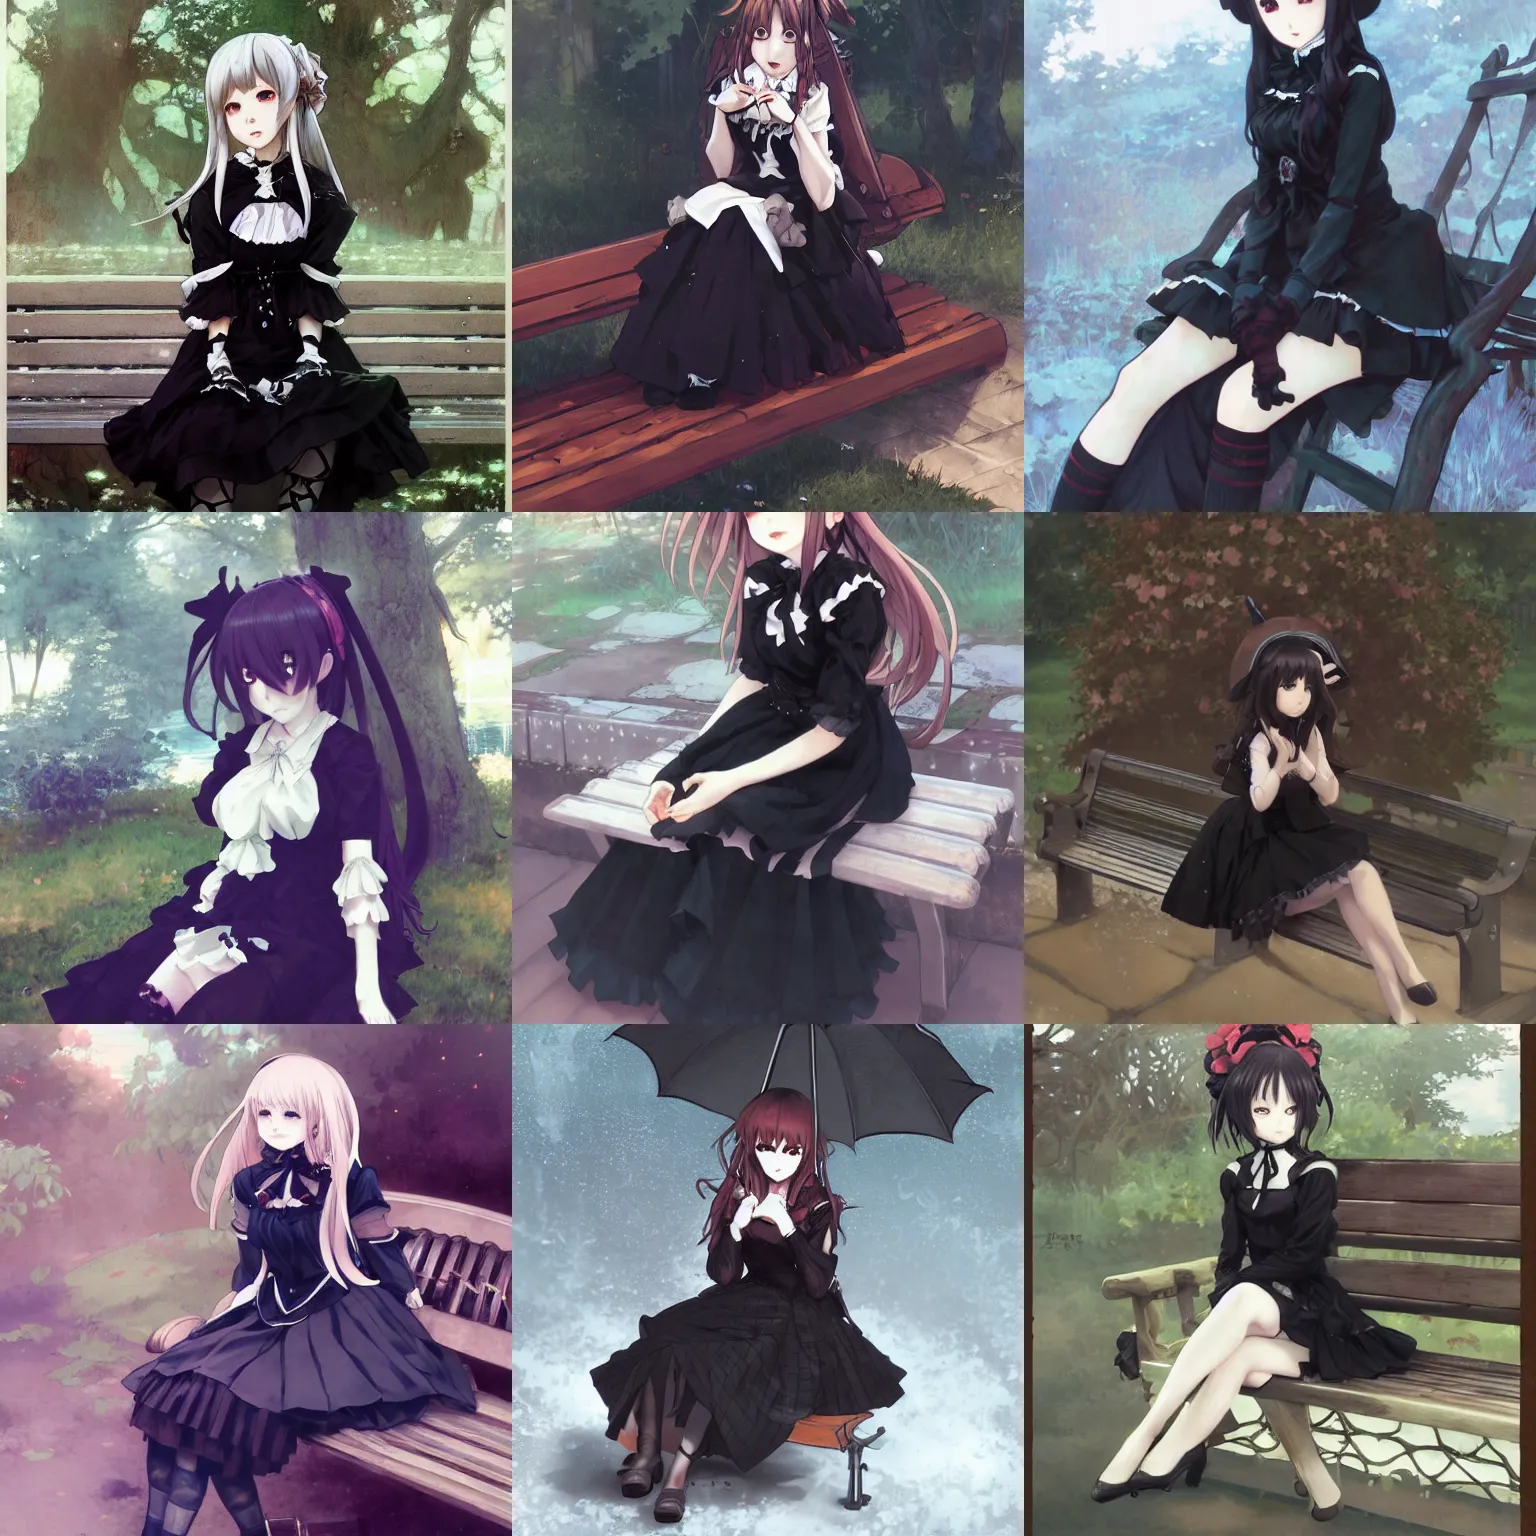 anime gothic loli dress